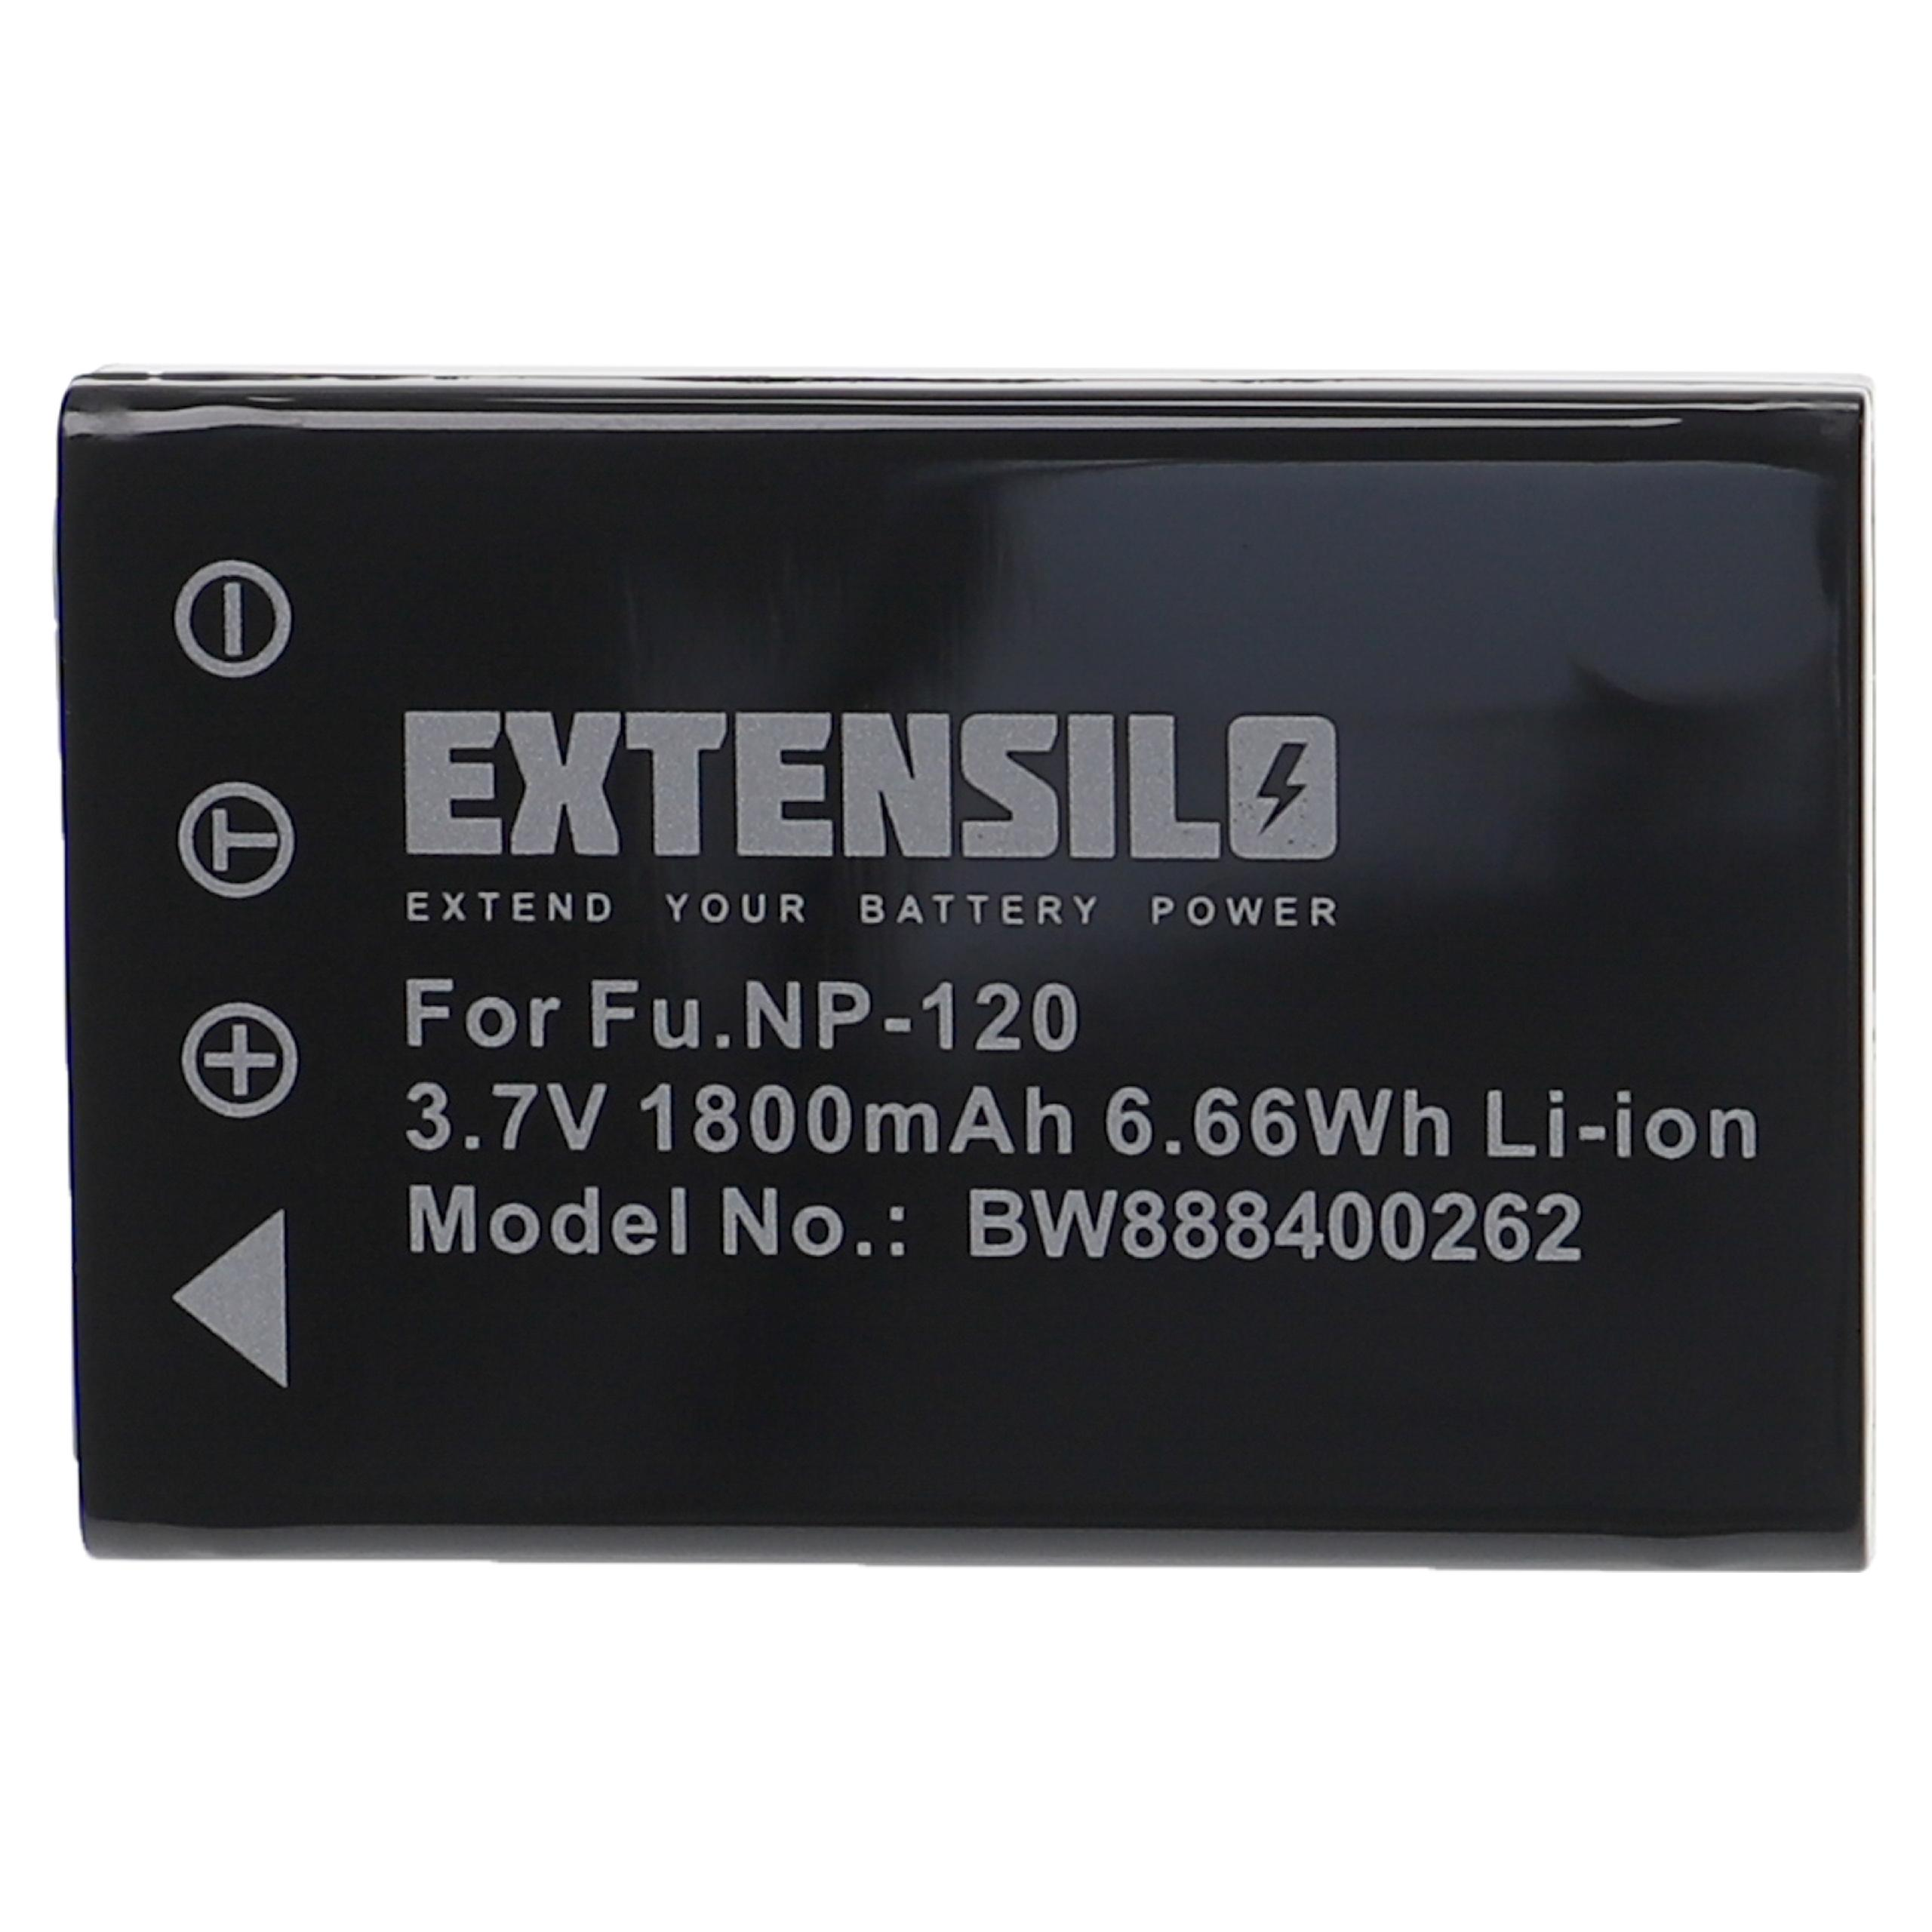 EXTENSILO Pentax 750, Li-Ion kompatibel - MX4, Optio 3.7 1800 Volt, 750Z, 555 Kamera, 450, MX, Akku mit 550,